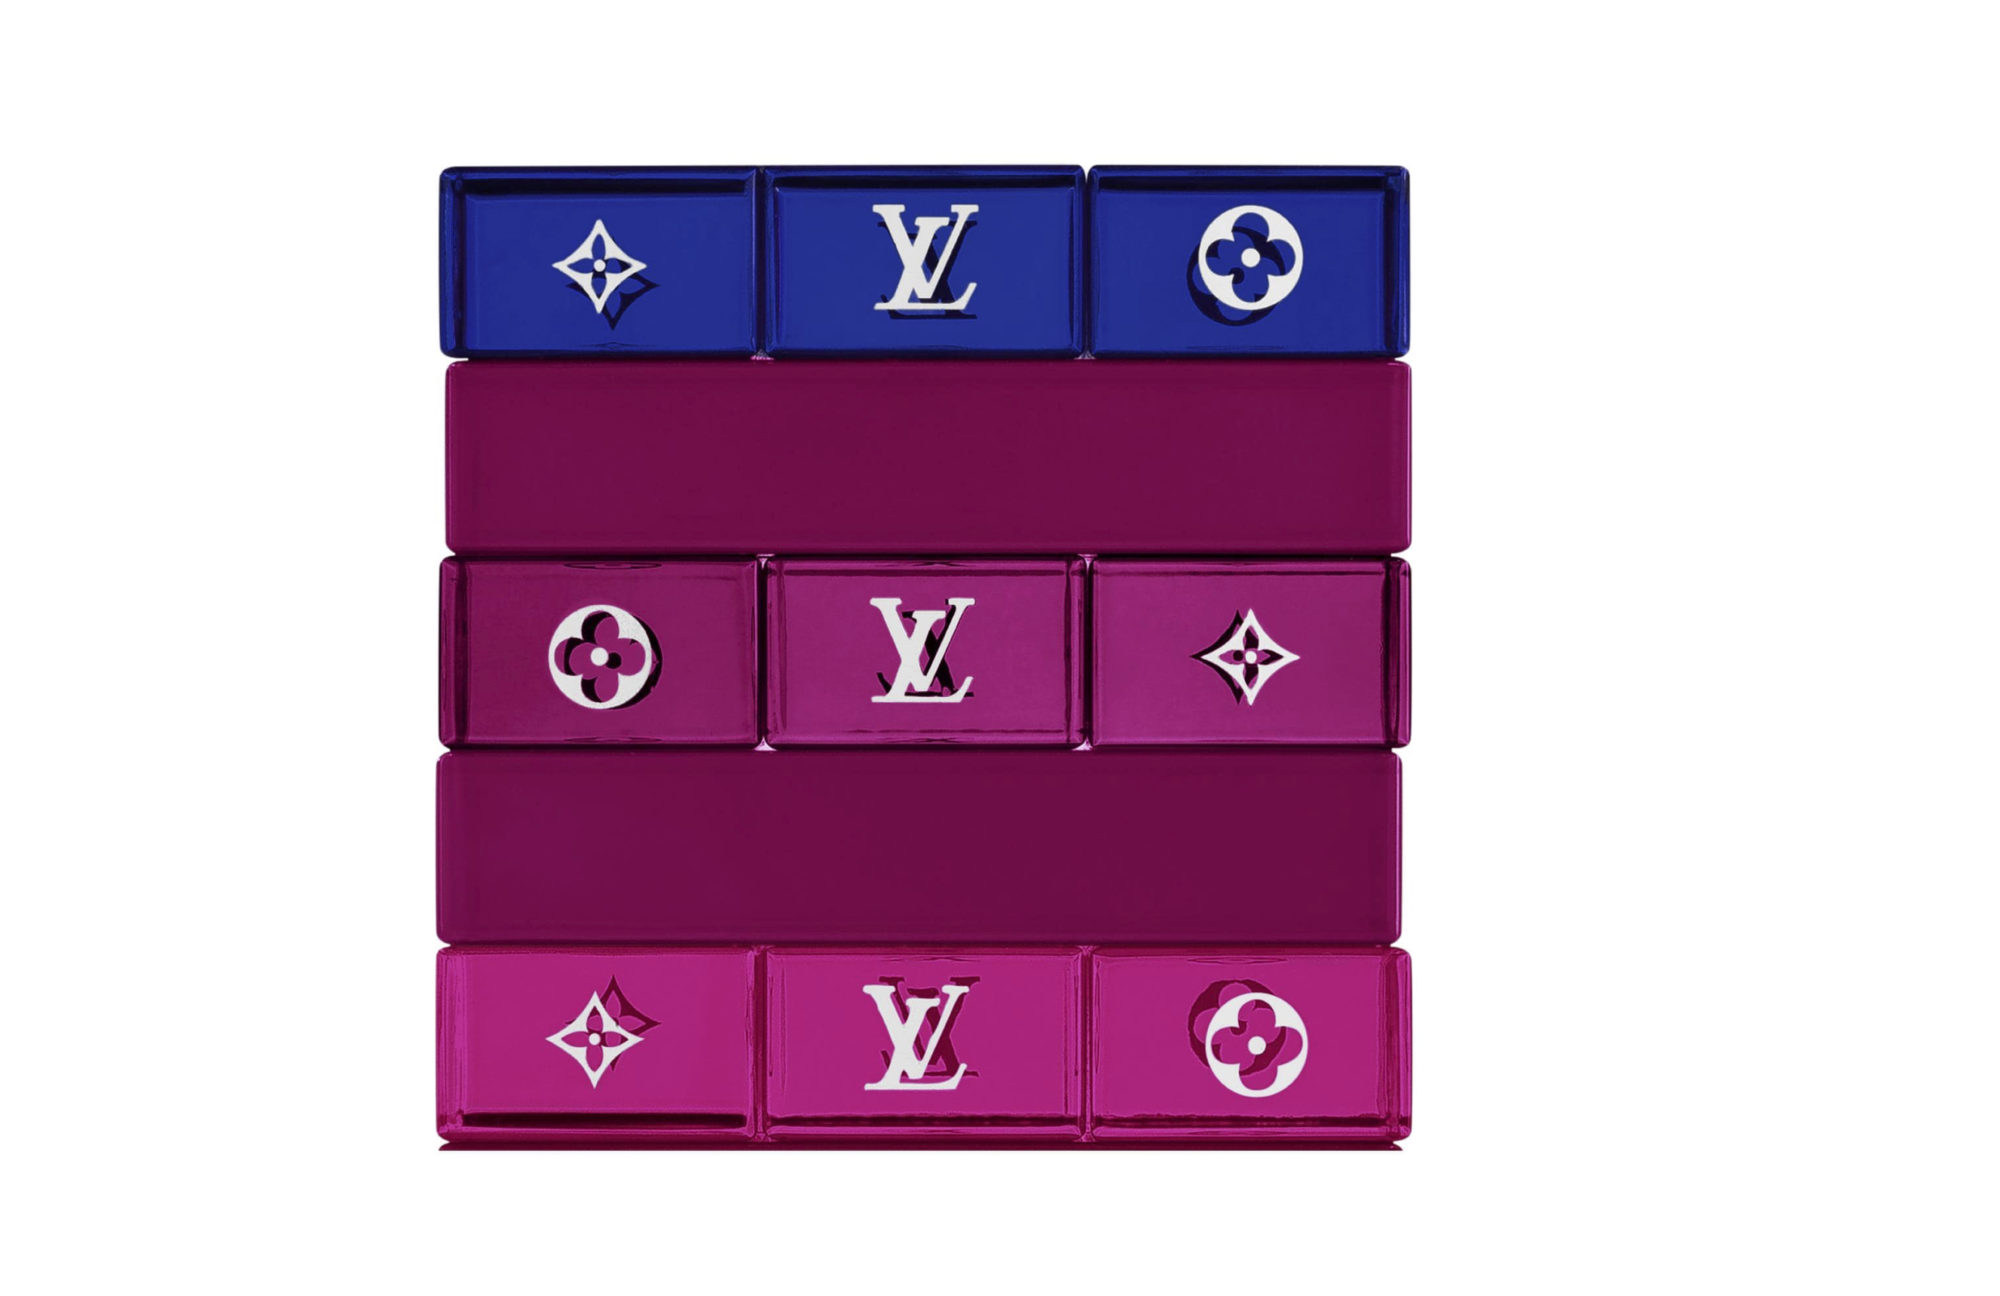 與好友一同重溫童年時光！ Louis Vuitton 推出豪華疊疊樂 Monogram Tower Jenga - The Femin